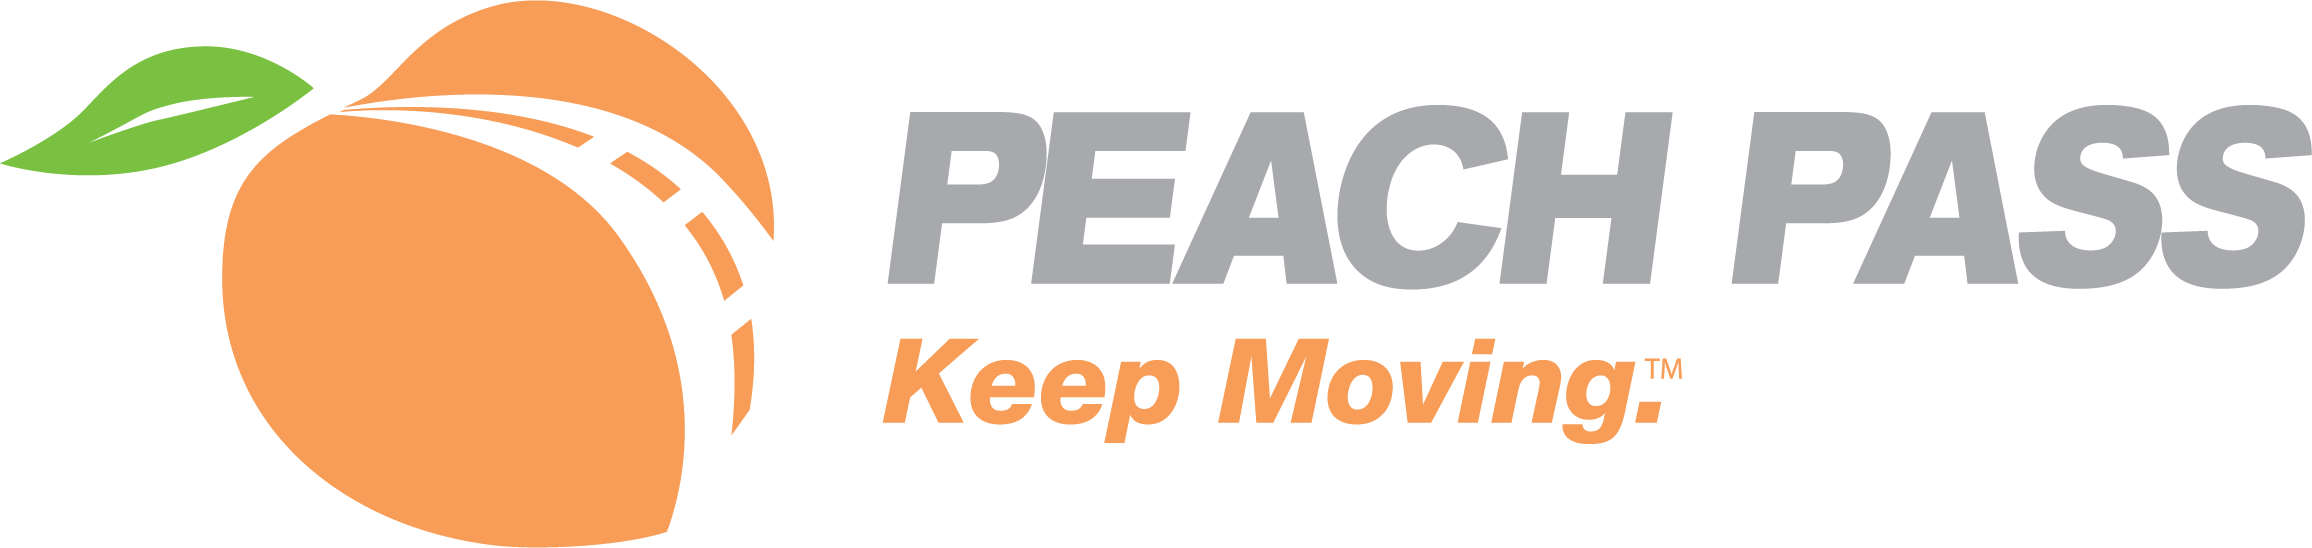 Home - Peach Pass | Keep Moving